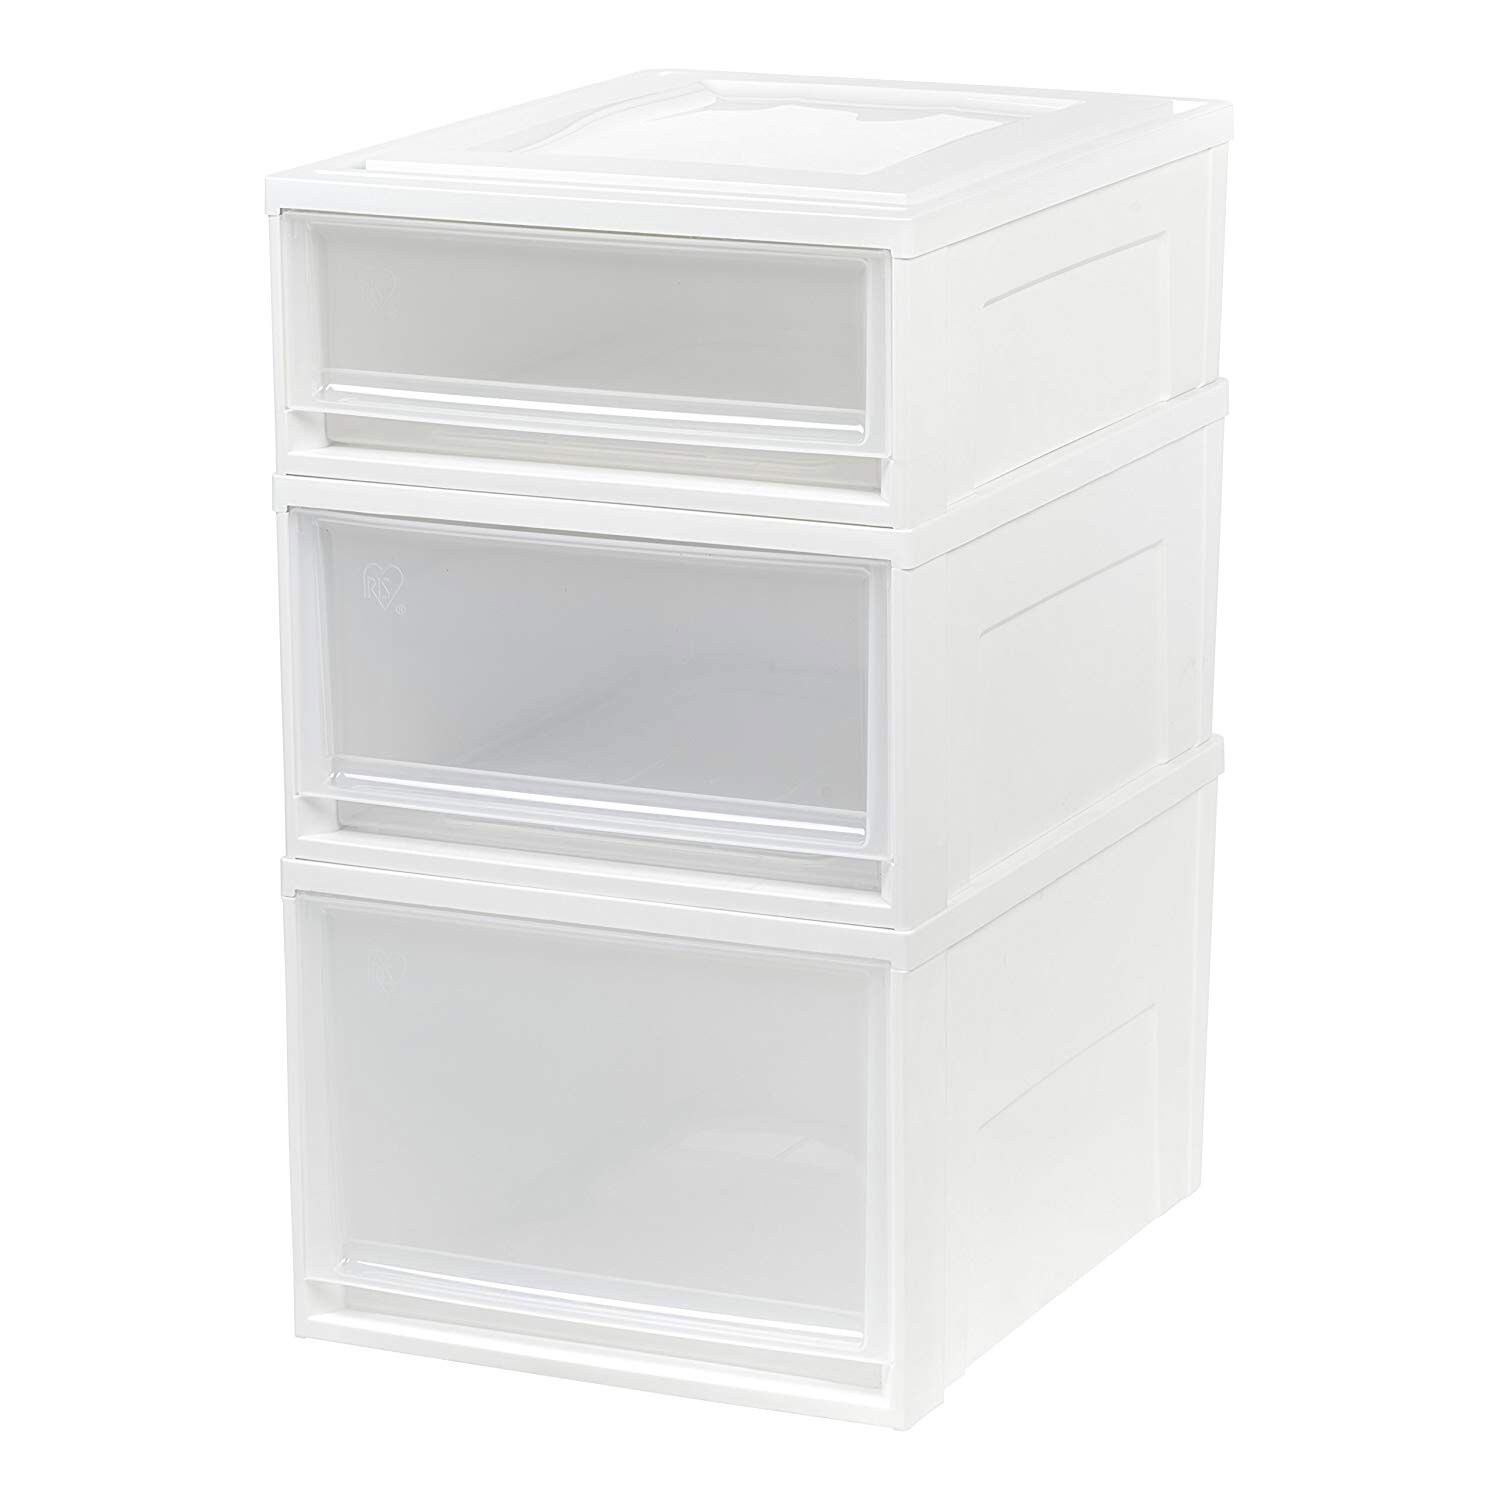 Details about   IRIS 30 Quart Medium Stackable Plastic Storage Chest Drawer Bin 3 Pack White 